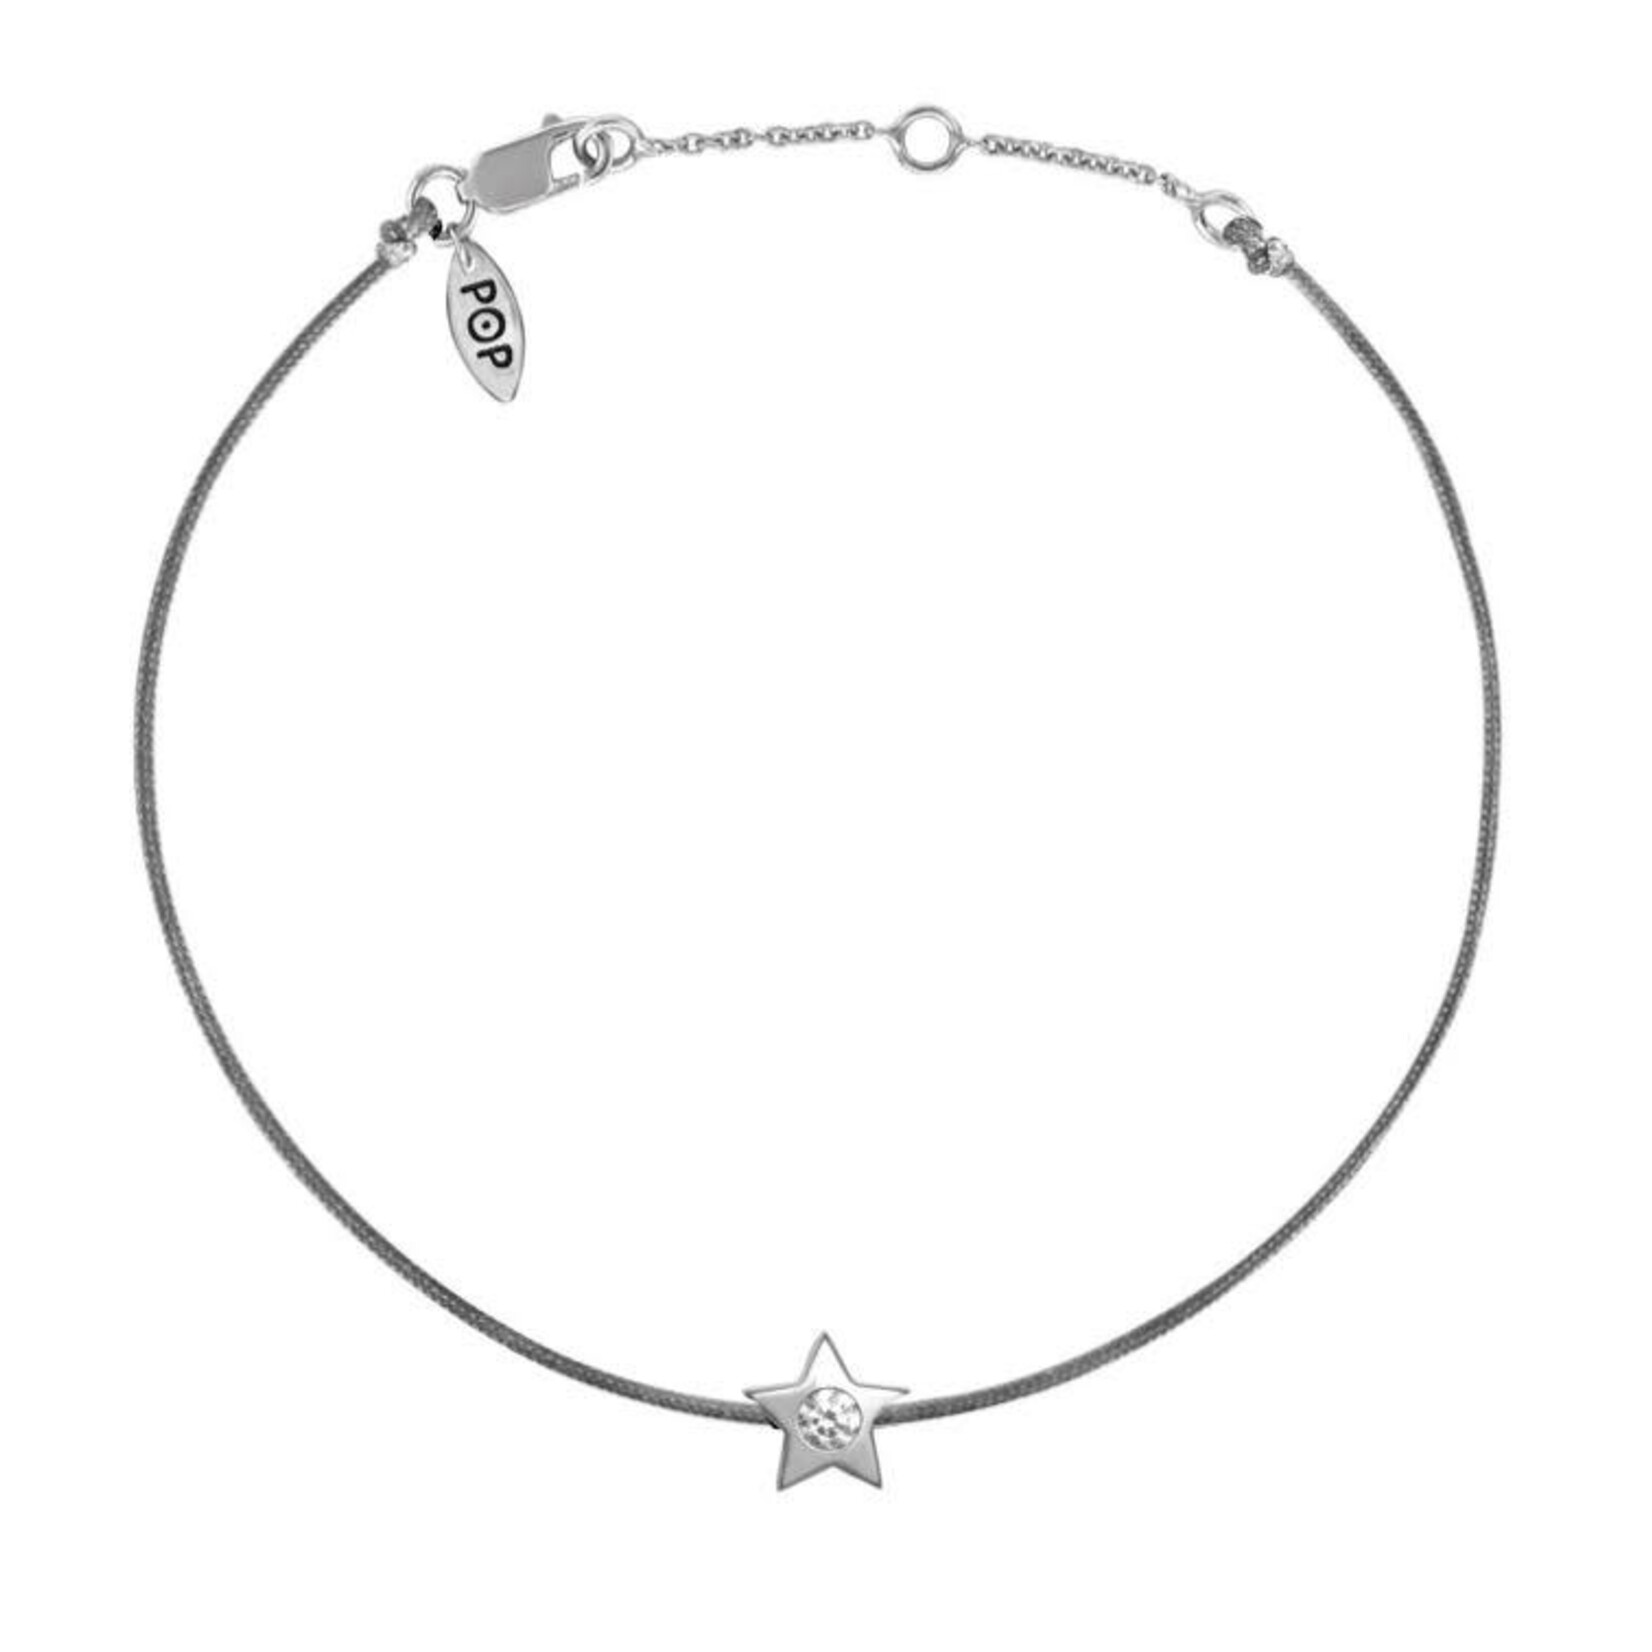 Pop Diamond POP STAR bracelet/anklet, Braided water-resistant POP cord gtyd not to break, stretch or fade, Bezel Set .10ctw Diamond, Jump Ring to adjust size